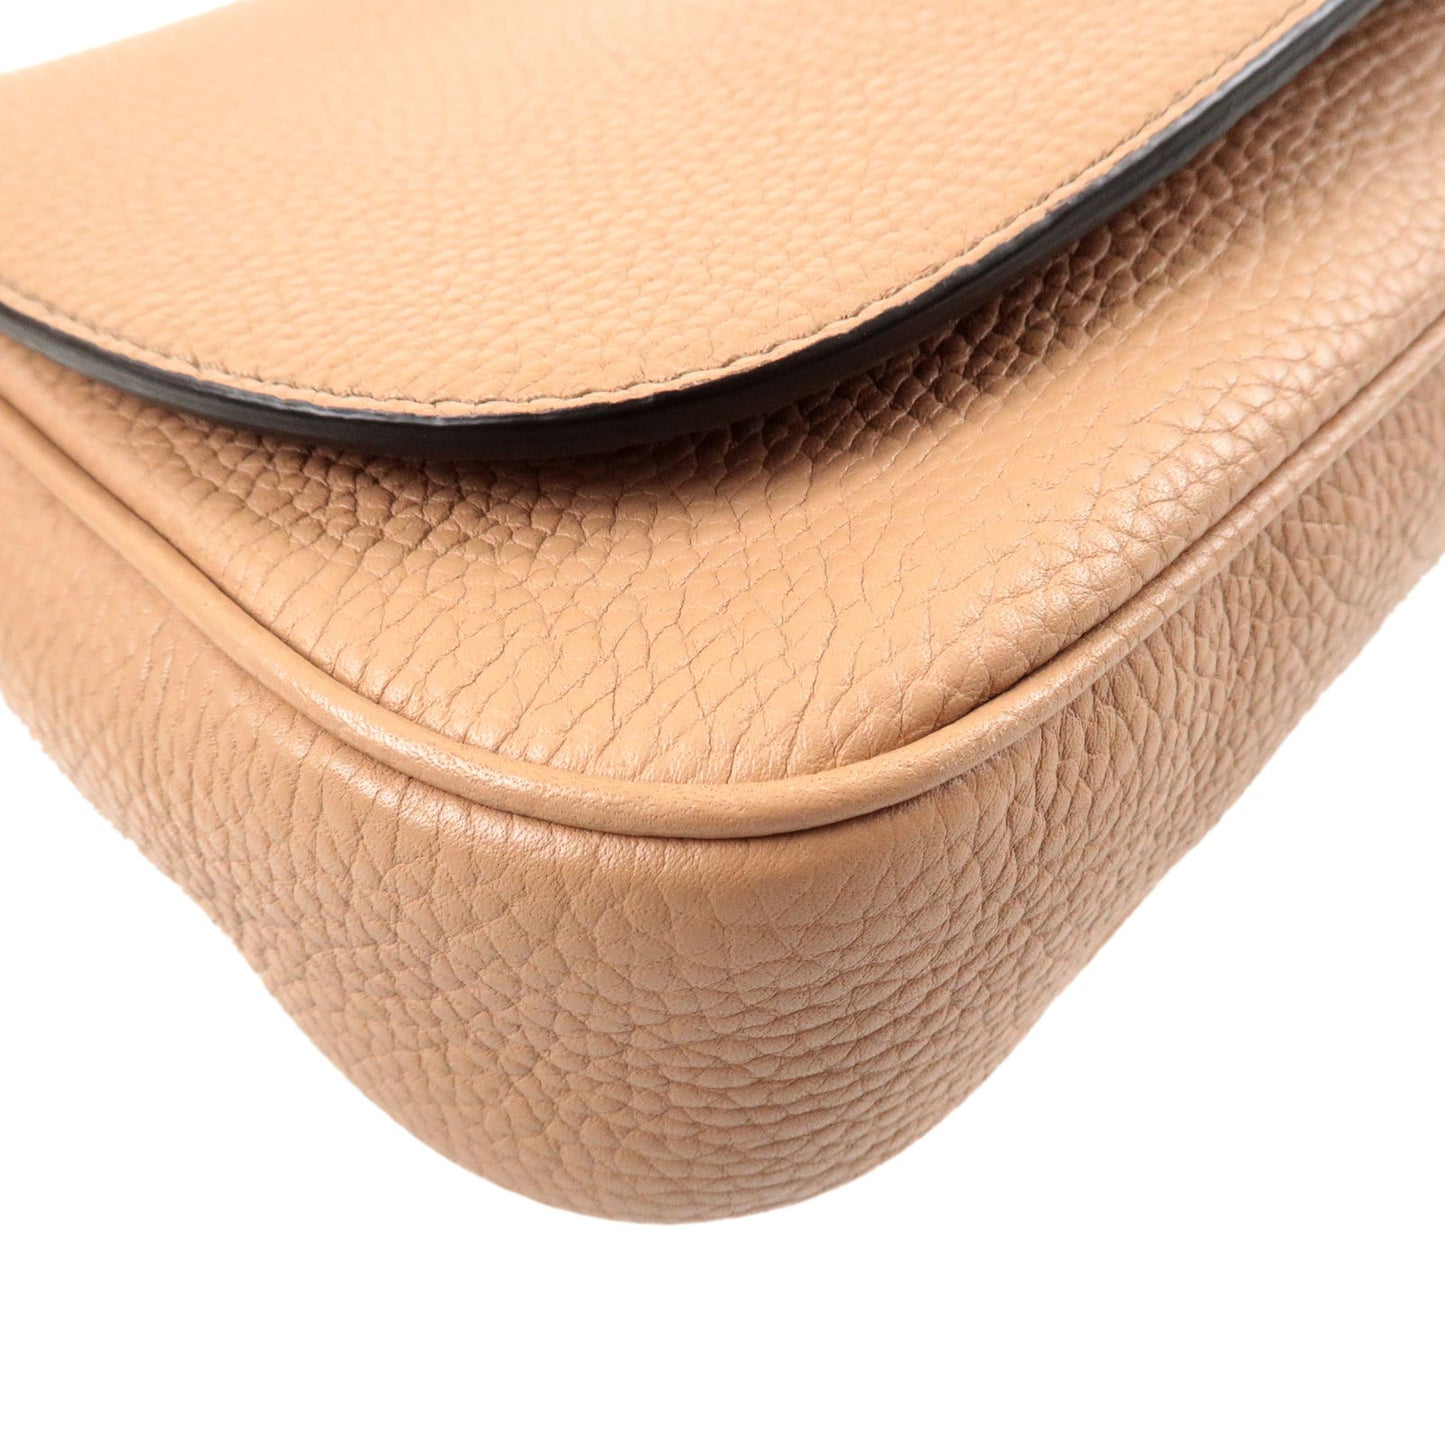 GUCCI SOHO Leather Chain Shoulder Bag Purse Beige 536224